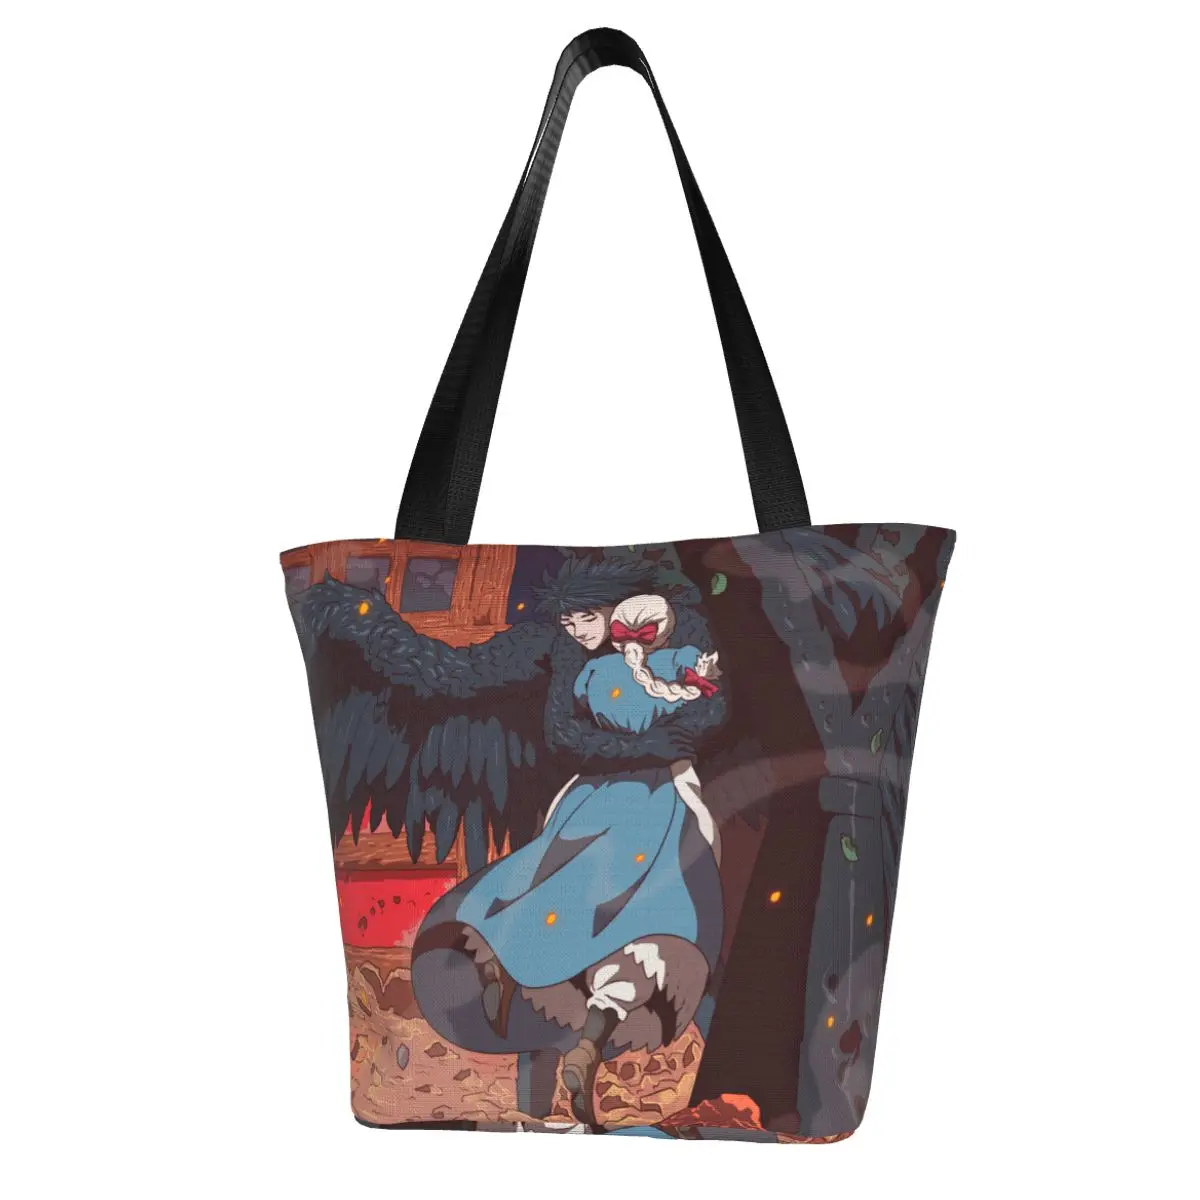 

Howl Hugging Sophie хозяйственная сумка Howls Moving Castle уличная женская сумка Подарки Забавные тканевые сумки